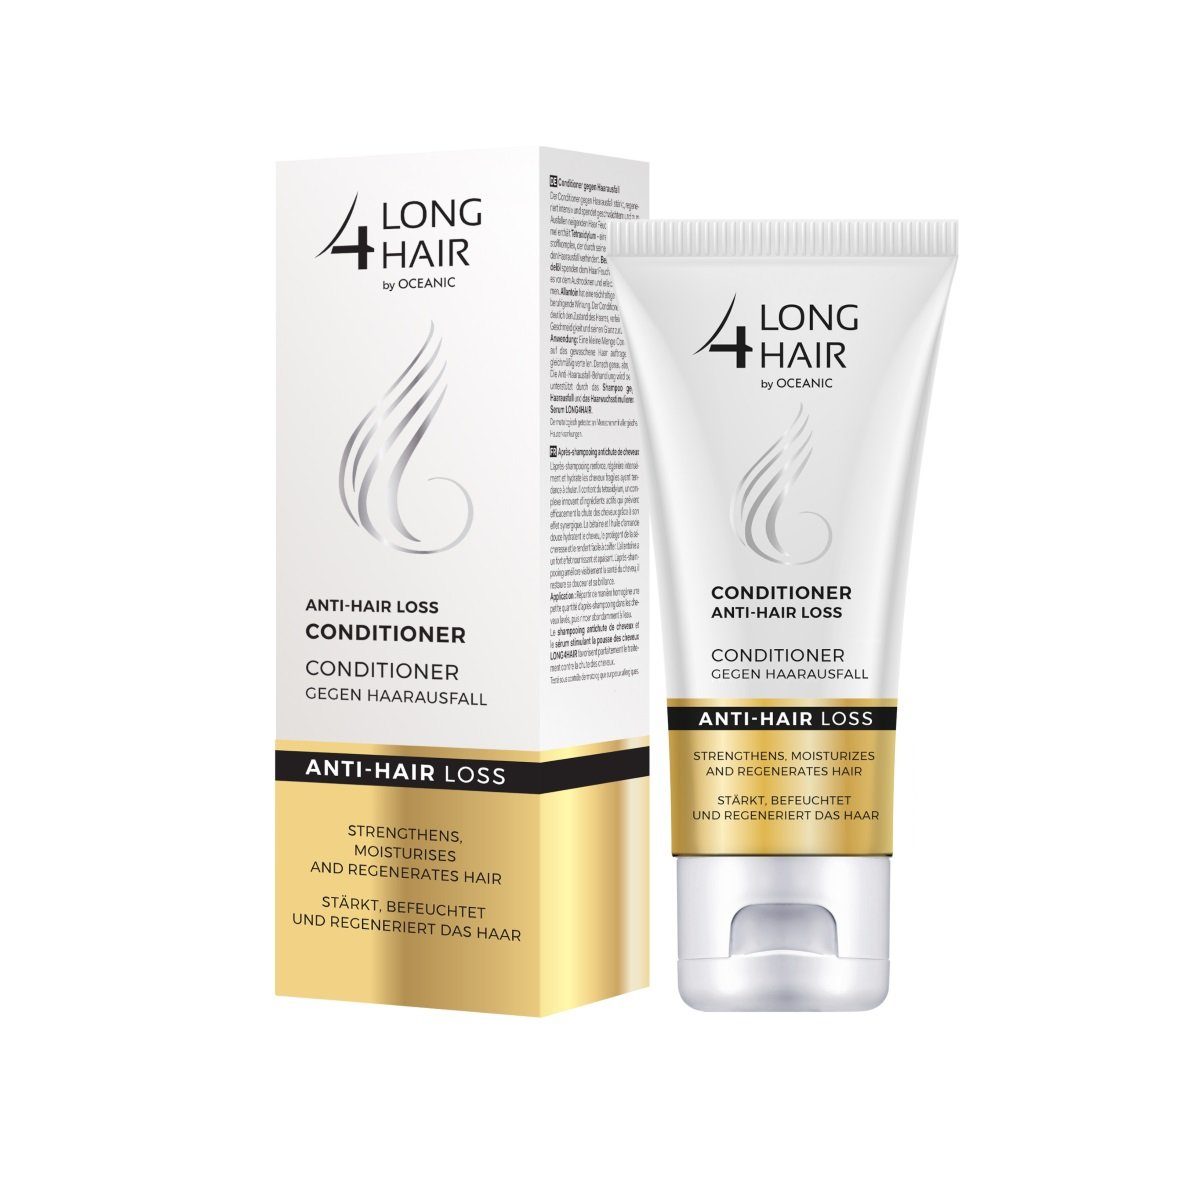 Oceanic Duschpflege Oceanic Long4Lashes Anti Hair Loss Strenghtening Conditioner 200 ml, Conditioner gegen Hausausfall | Duschgele